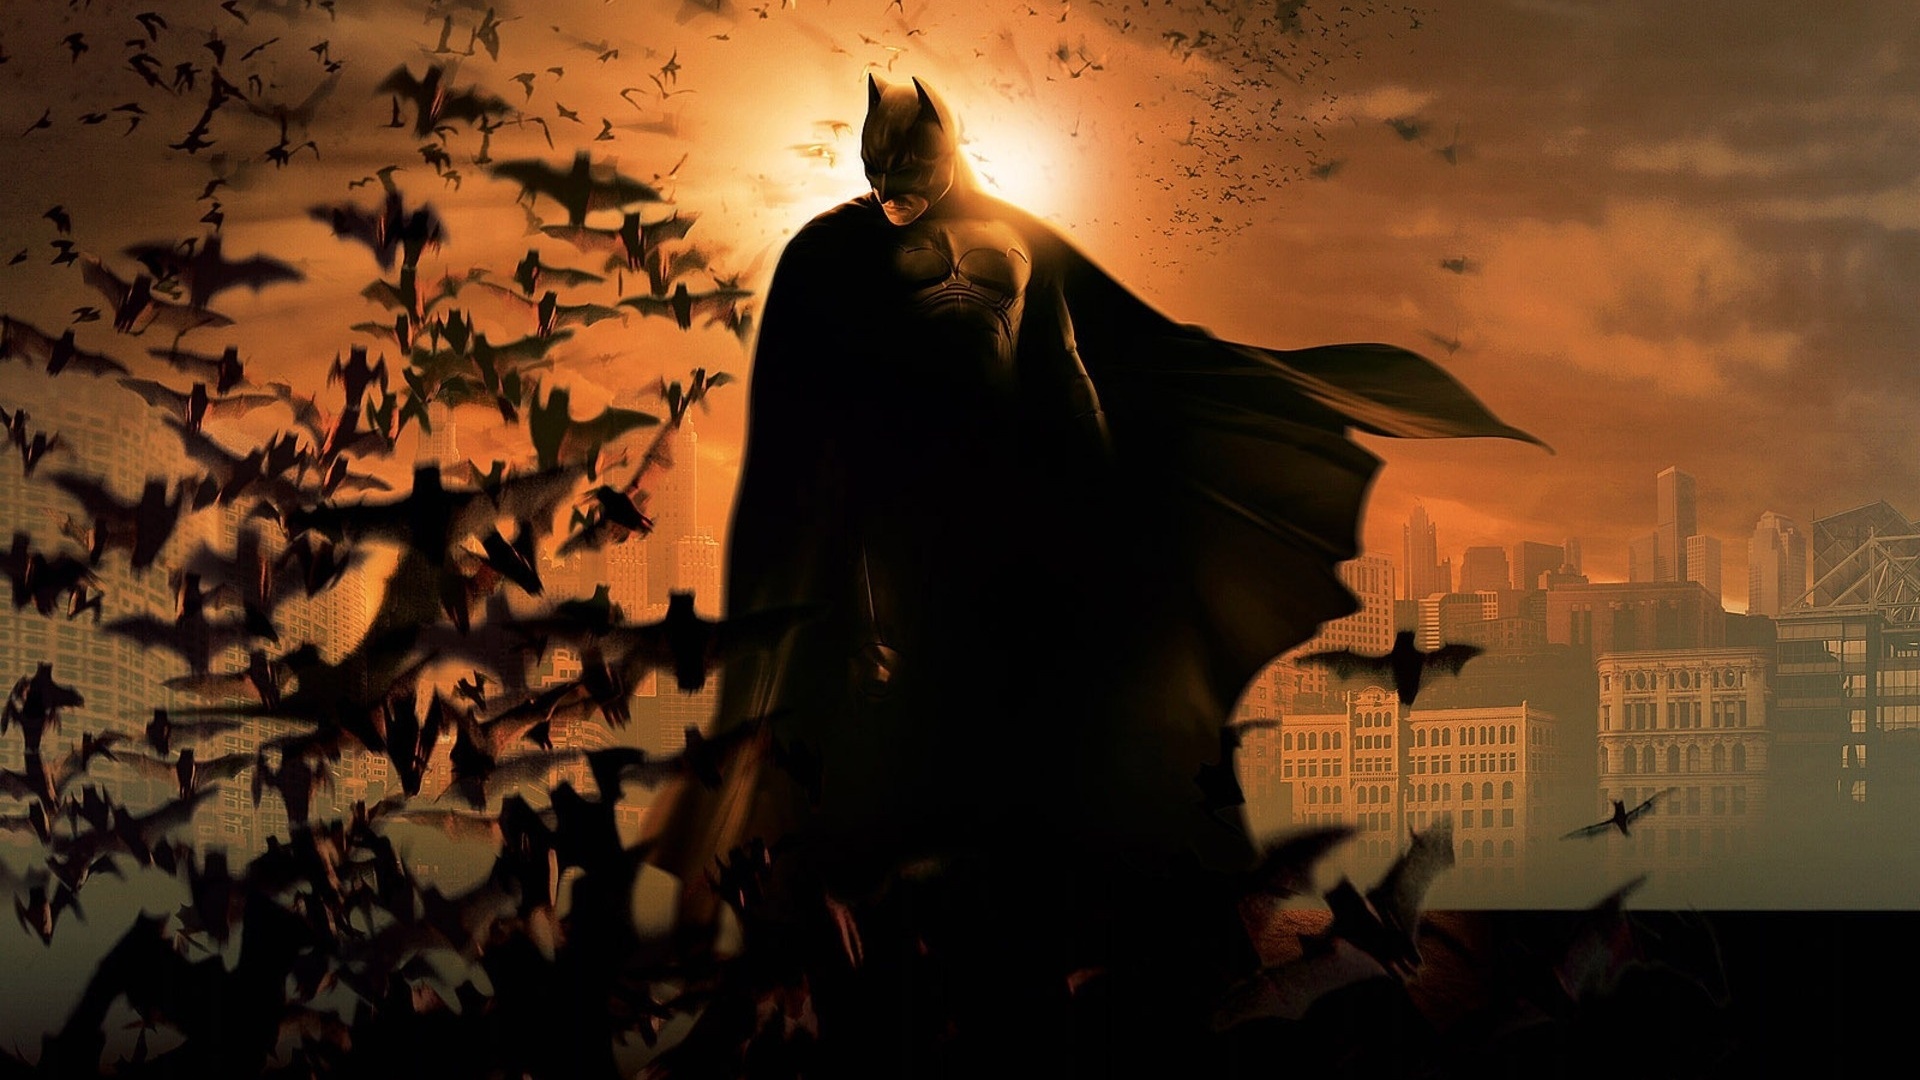 Wallpapers batman superhero night on the desktop